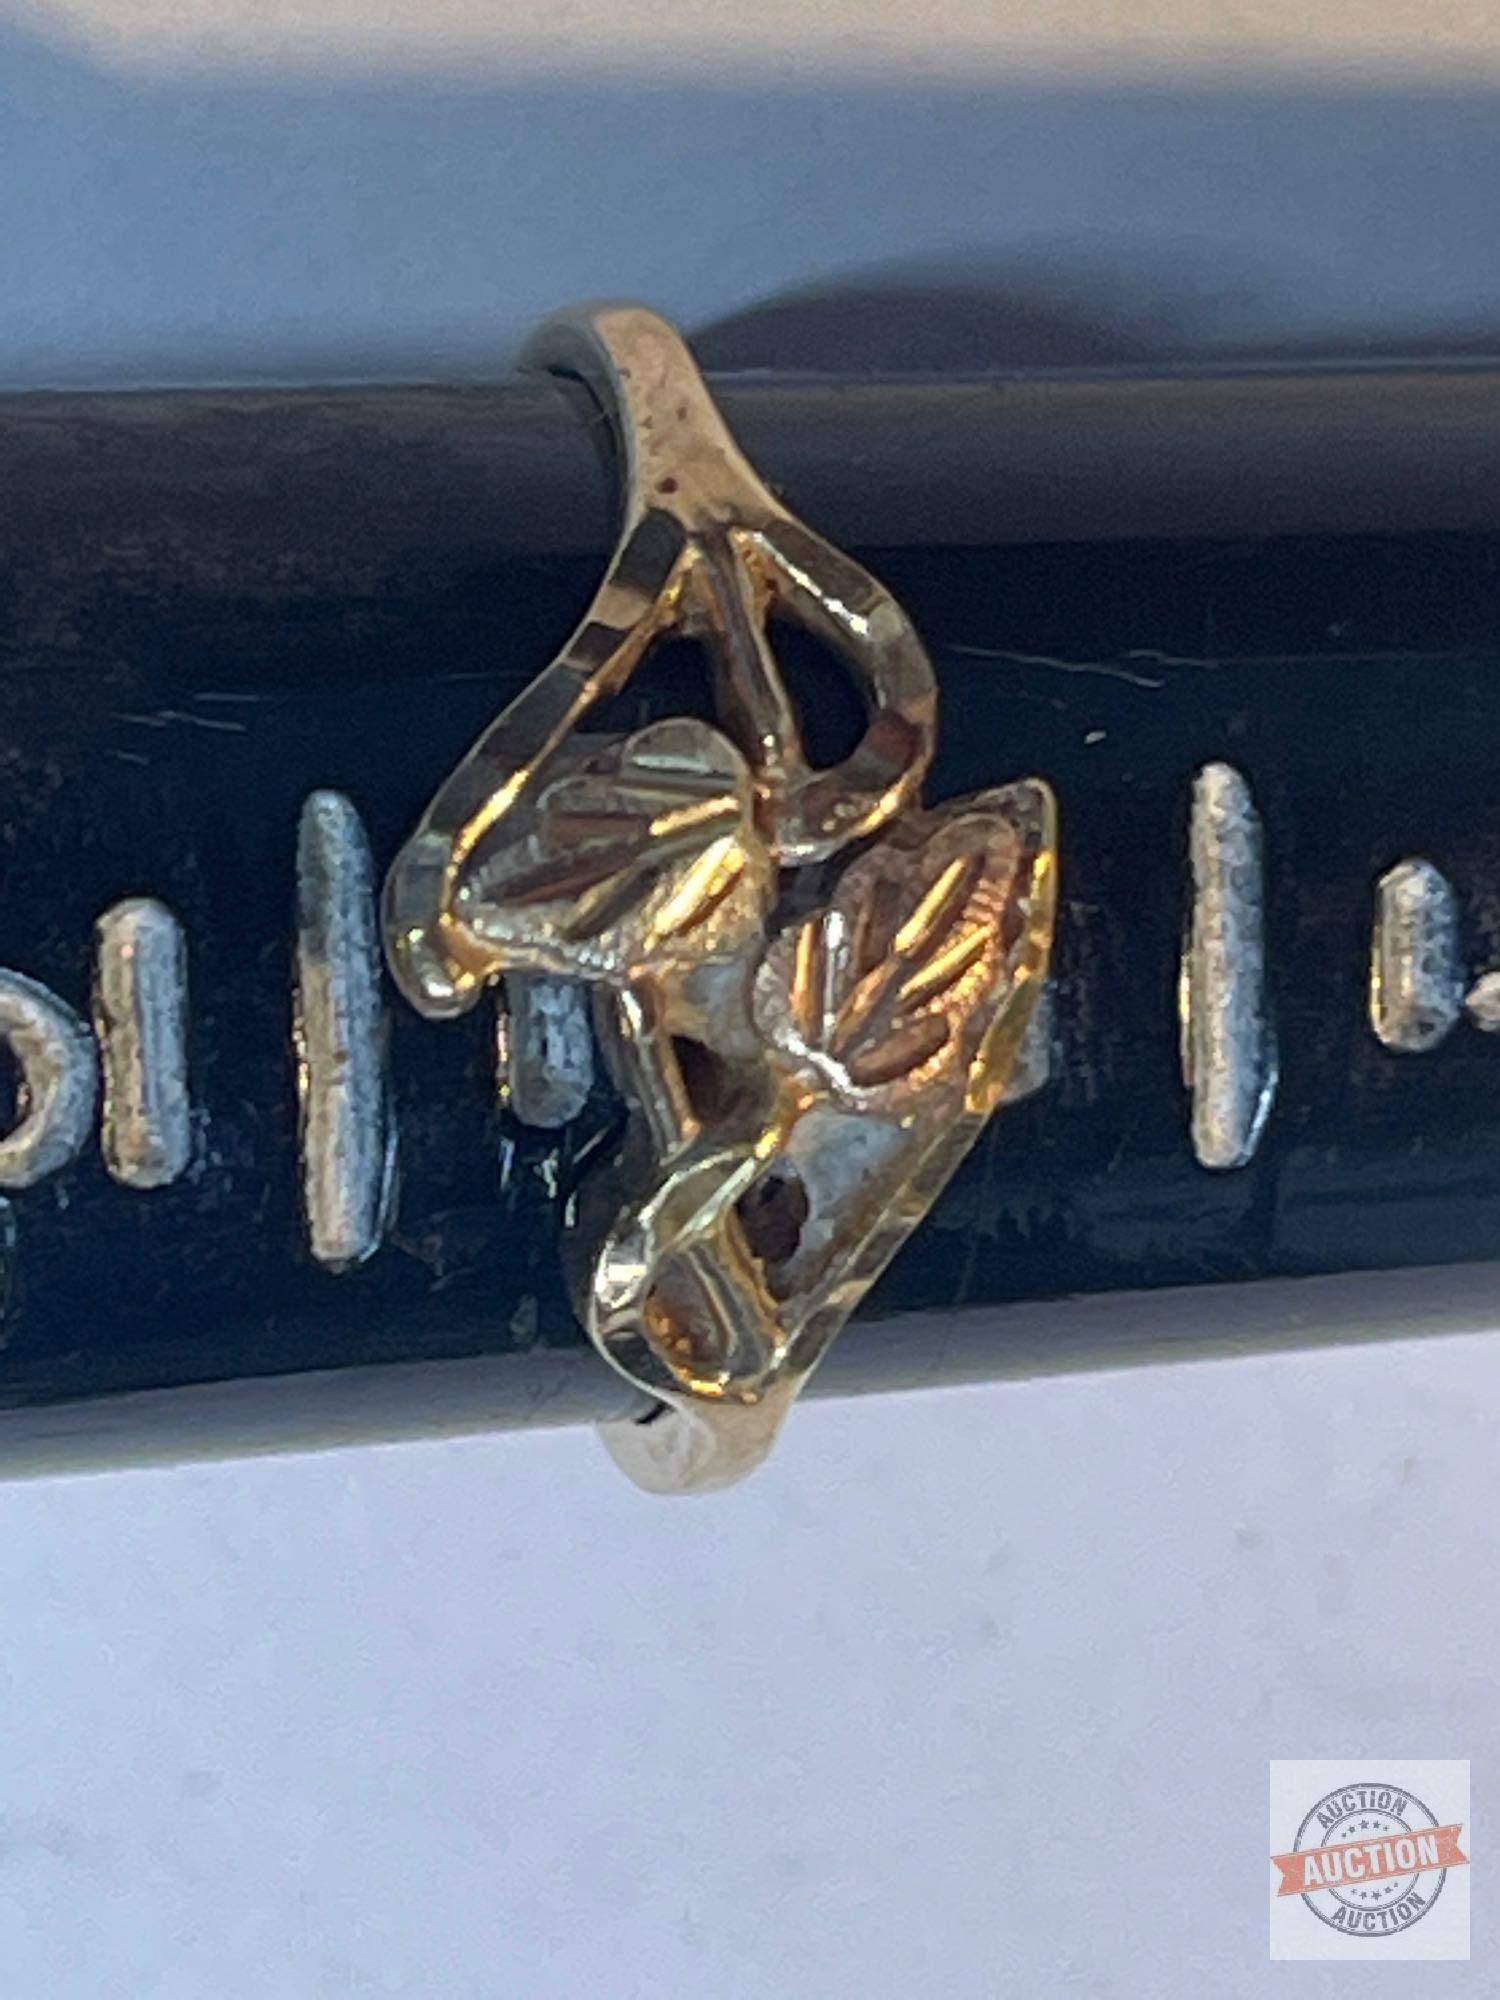 Jewelry - Ring, 10k Black Hills gold